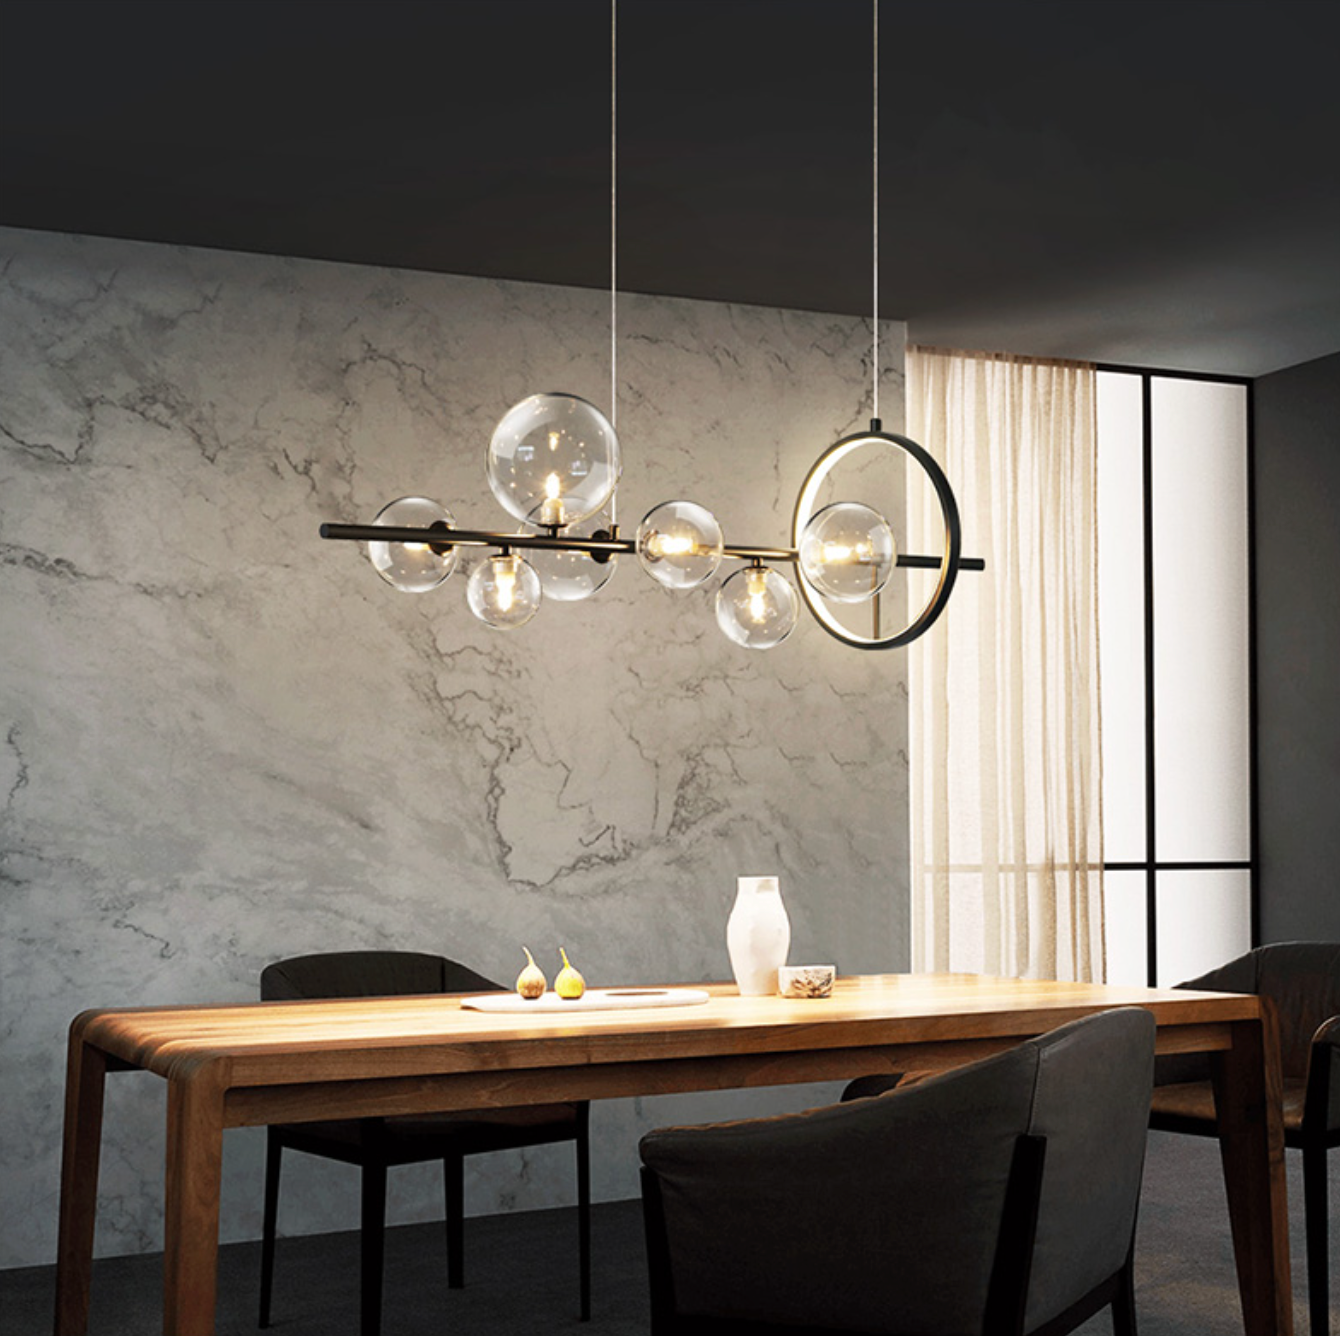 Soho modern luxury kitchen island pendant Light in luxurious marble dining room table setting